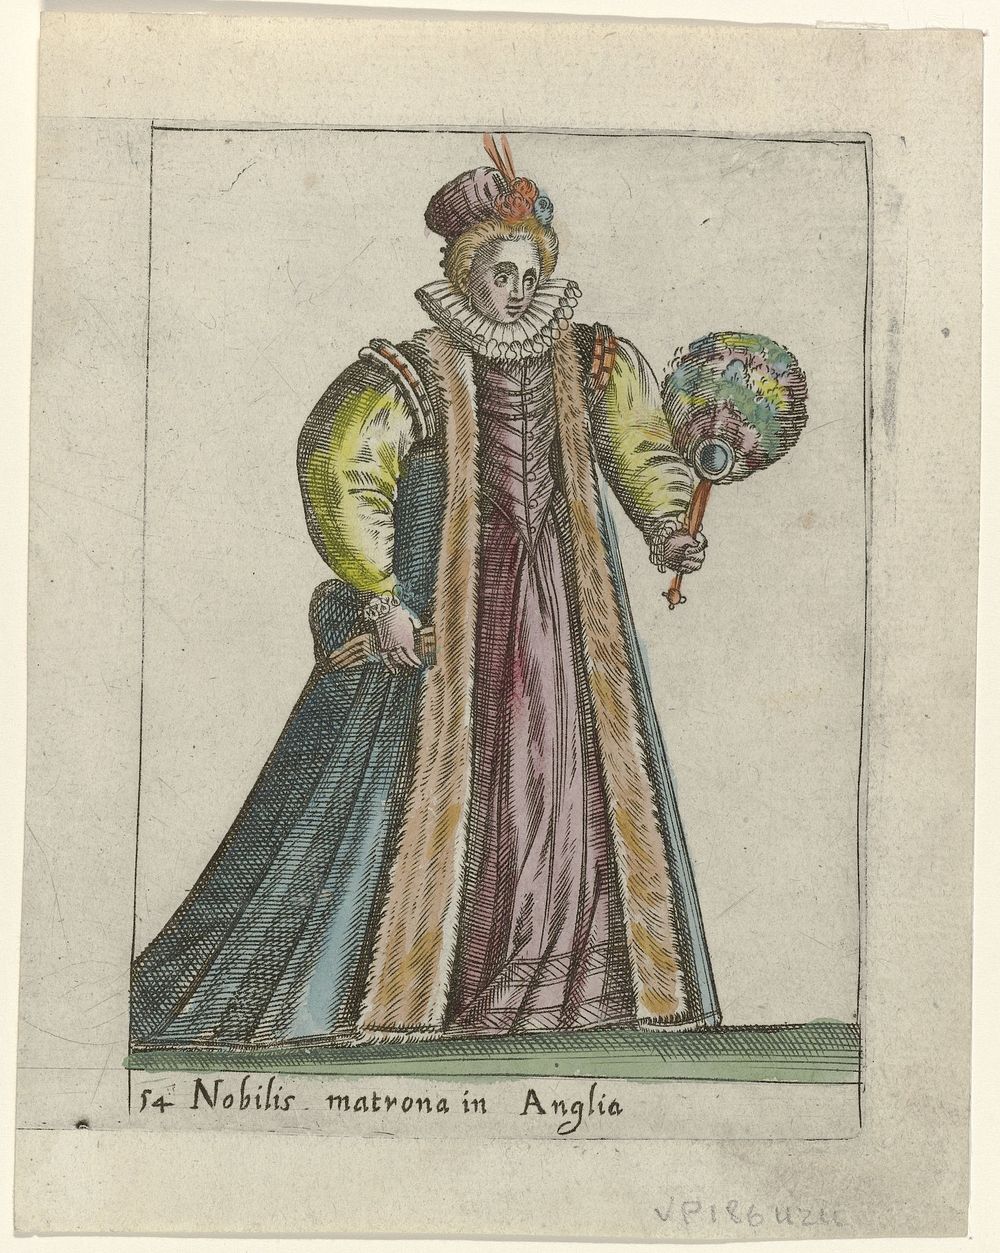 Nobilis matrona in Anglia (1592 - 1594) by anonymous and Pietro Bertelli